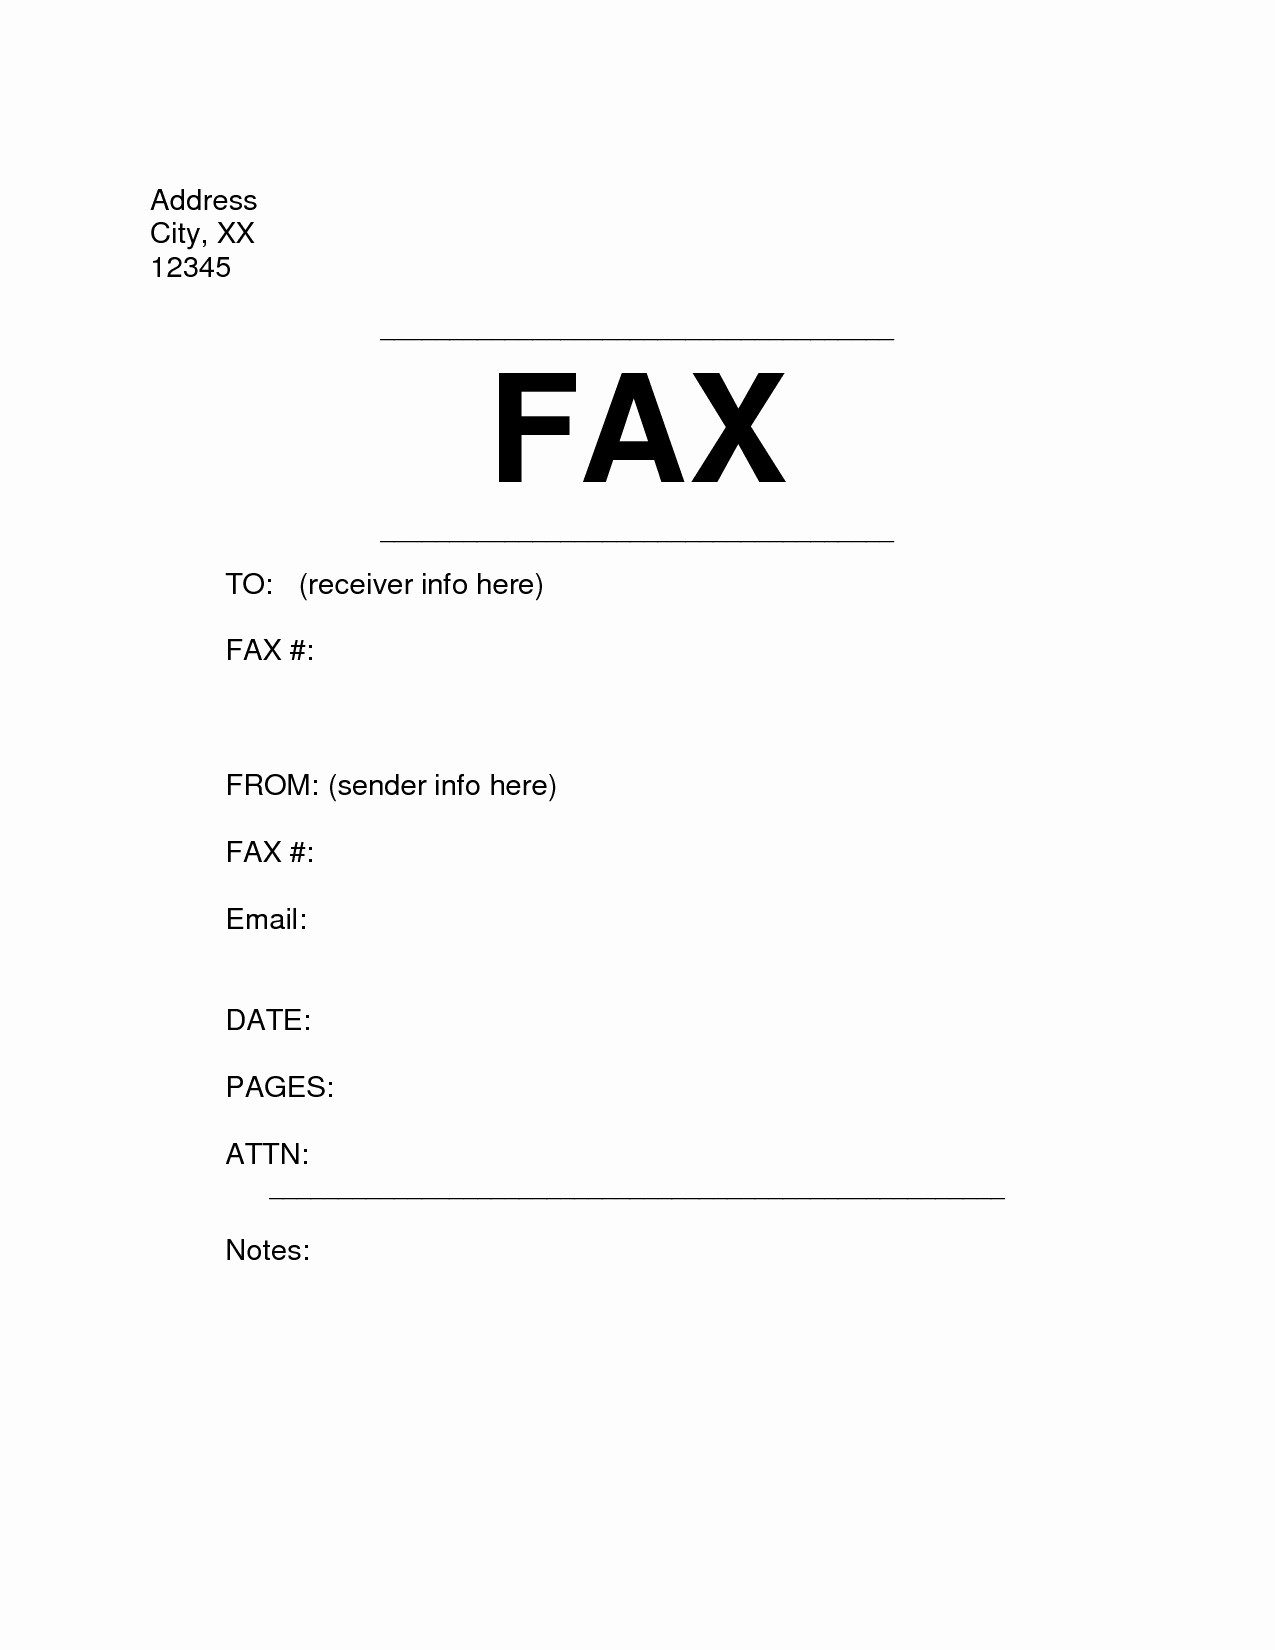 Fax Cover Sheet Template Microsoft Fresh Microsoft Fice Fax Cover Sheet Template